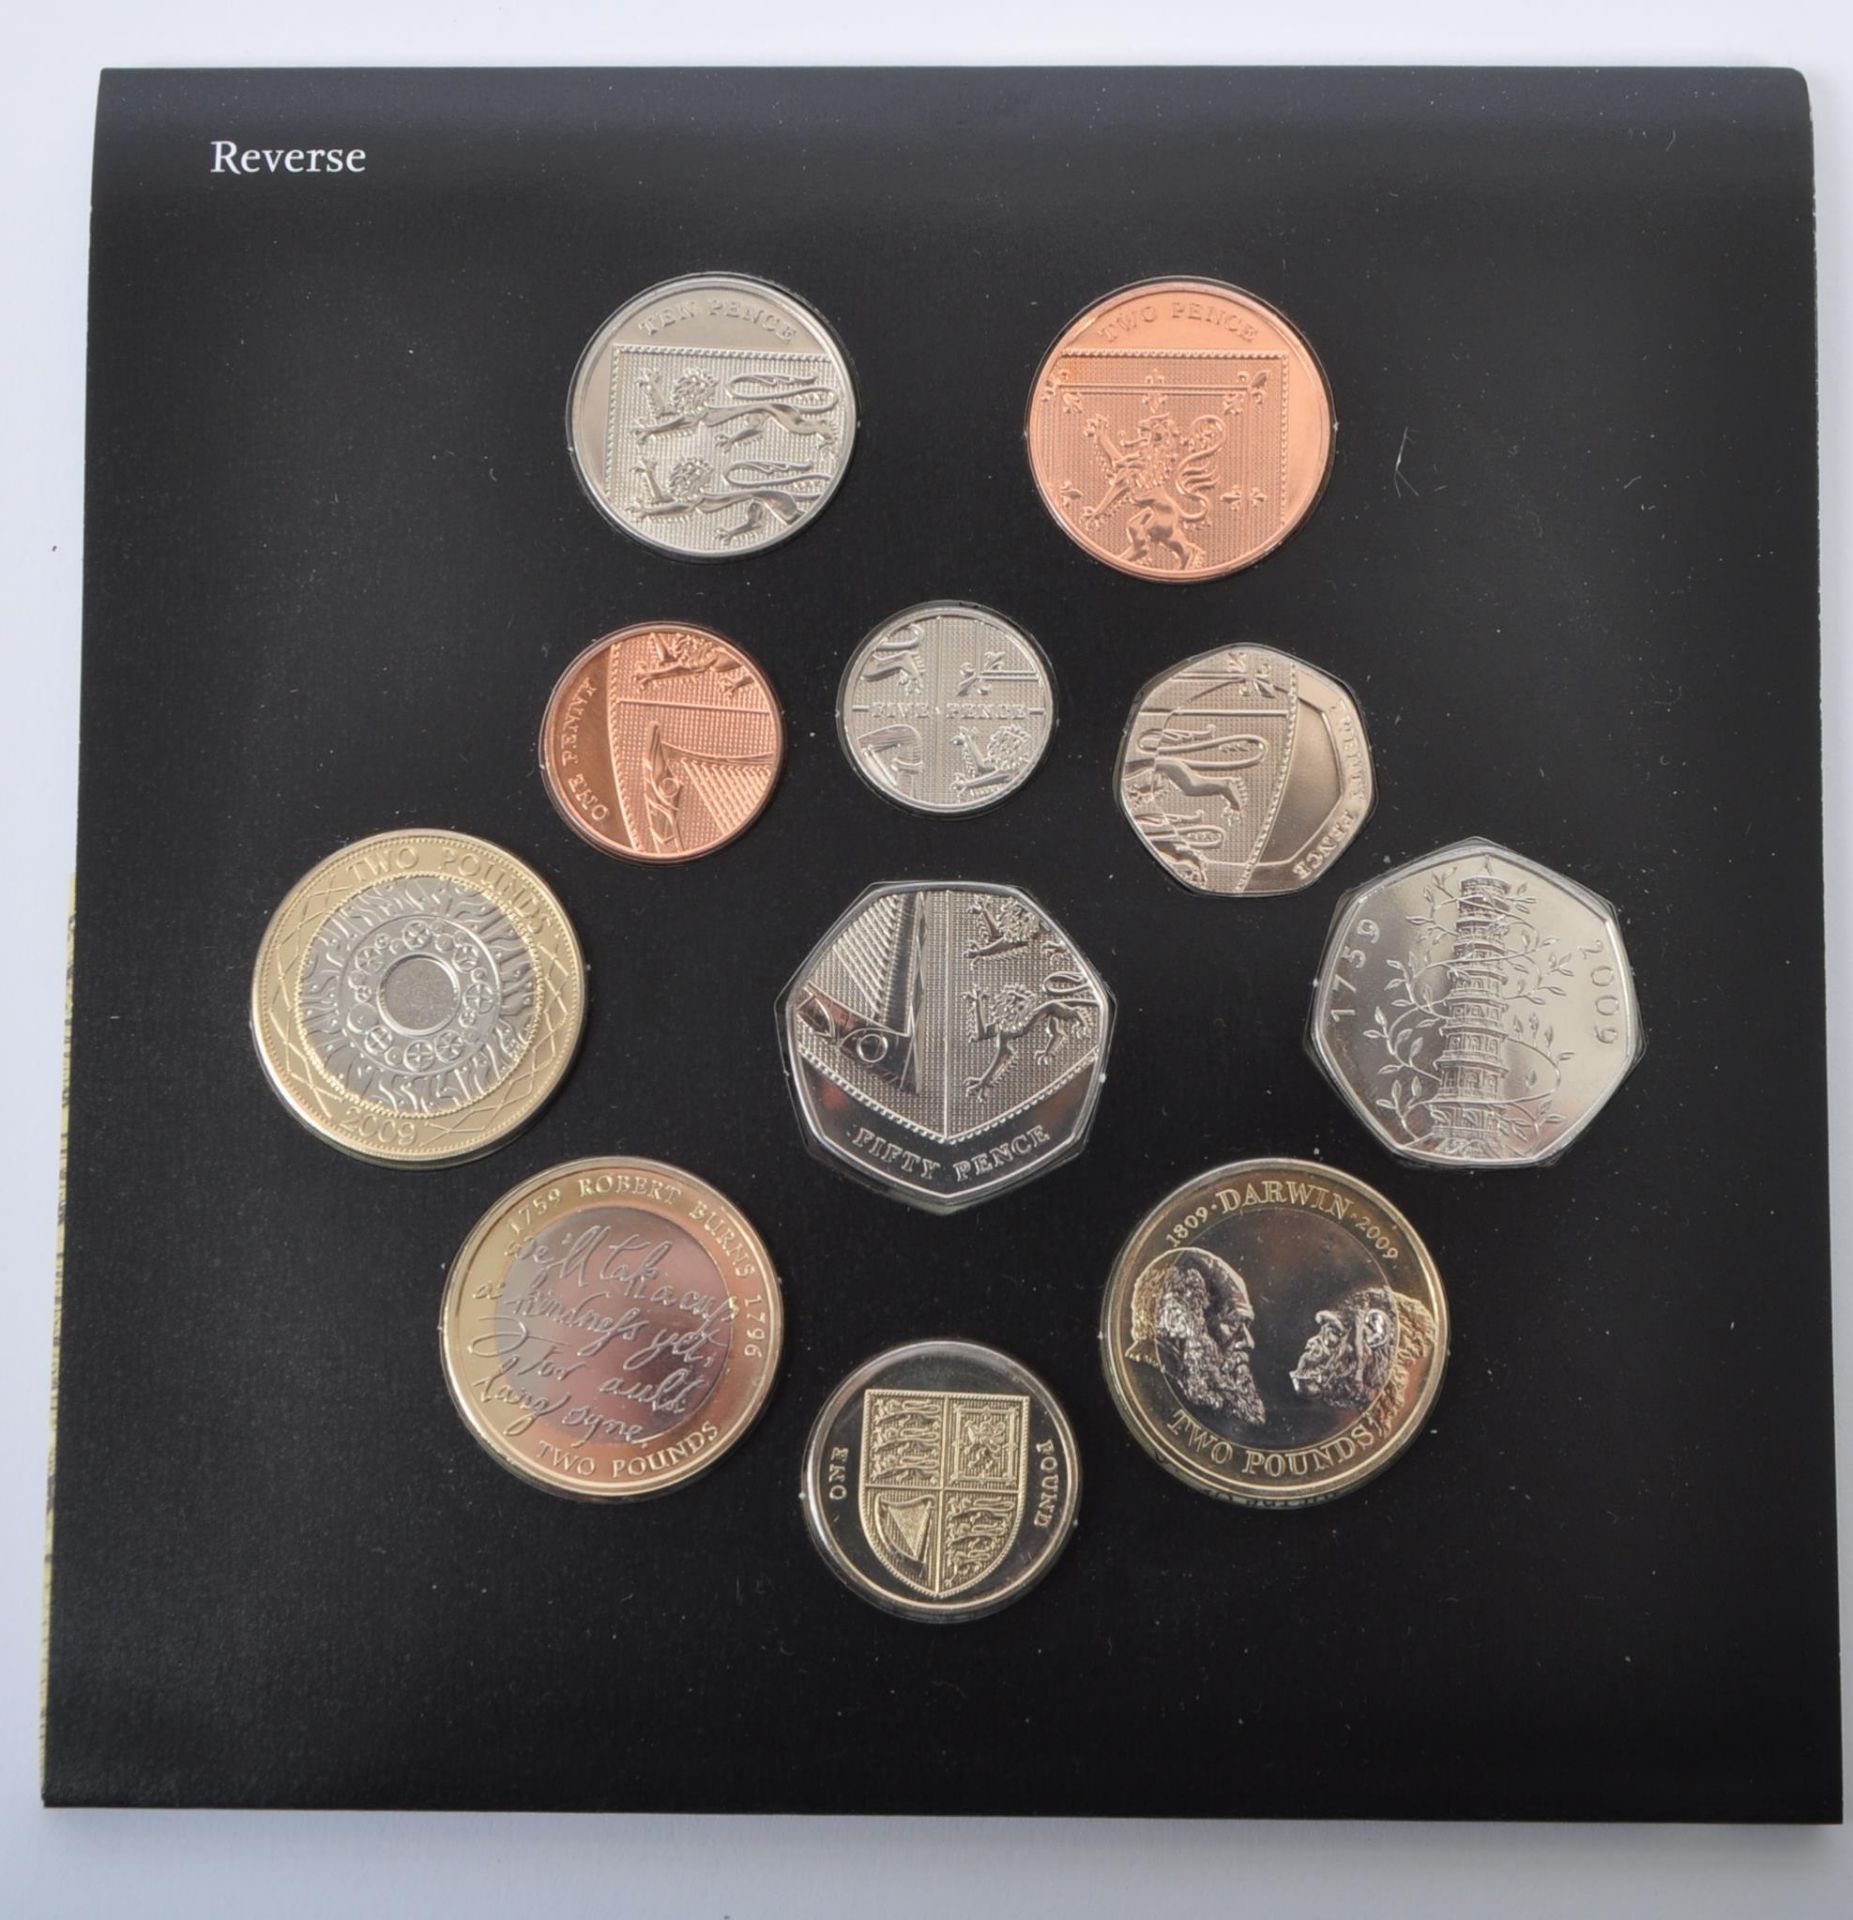 2009 ROYAL MINT UK BRILLIANT COIN SET - KEW GARDEN 50P - Image 2 of 5